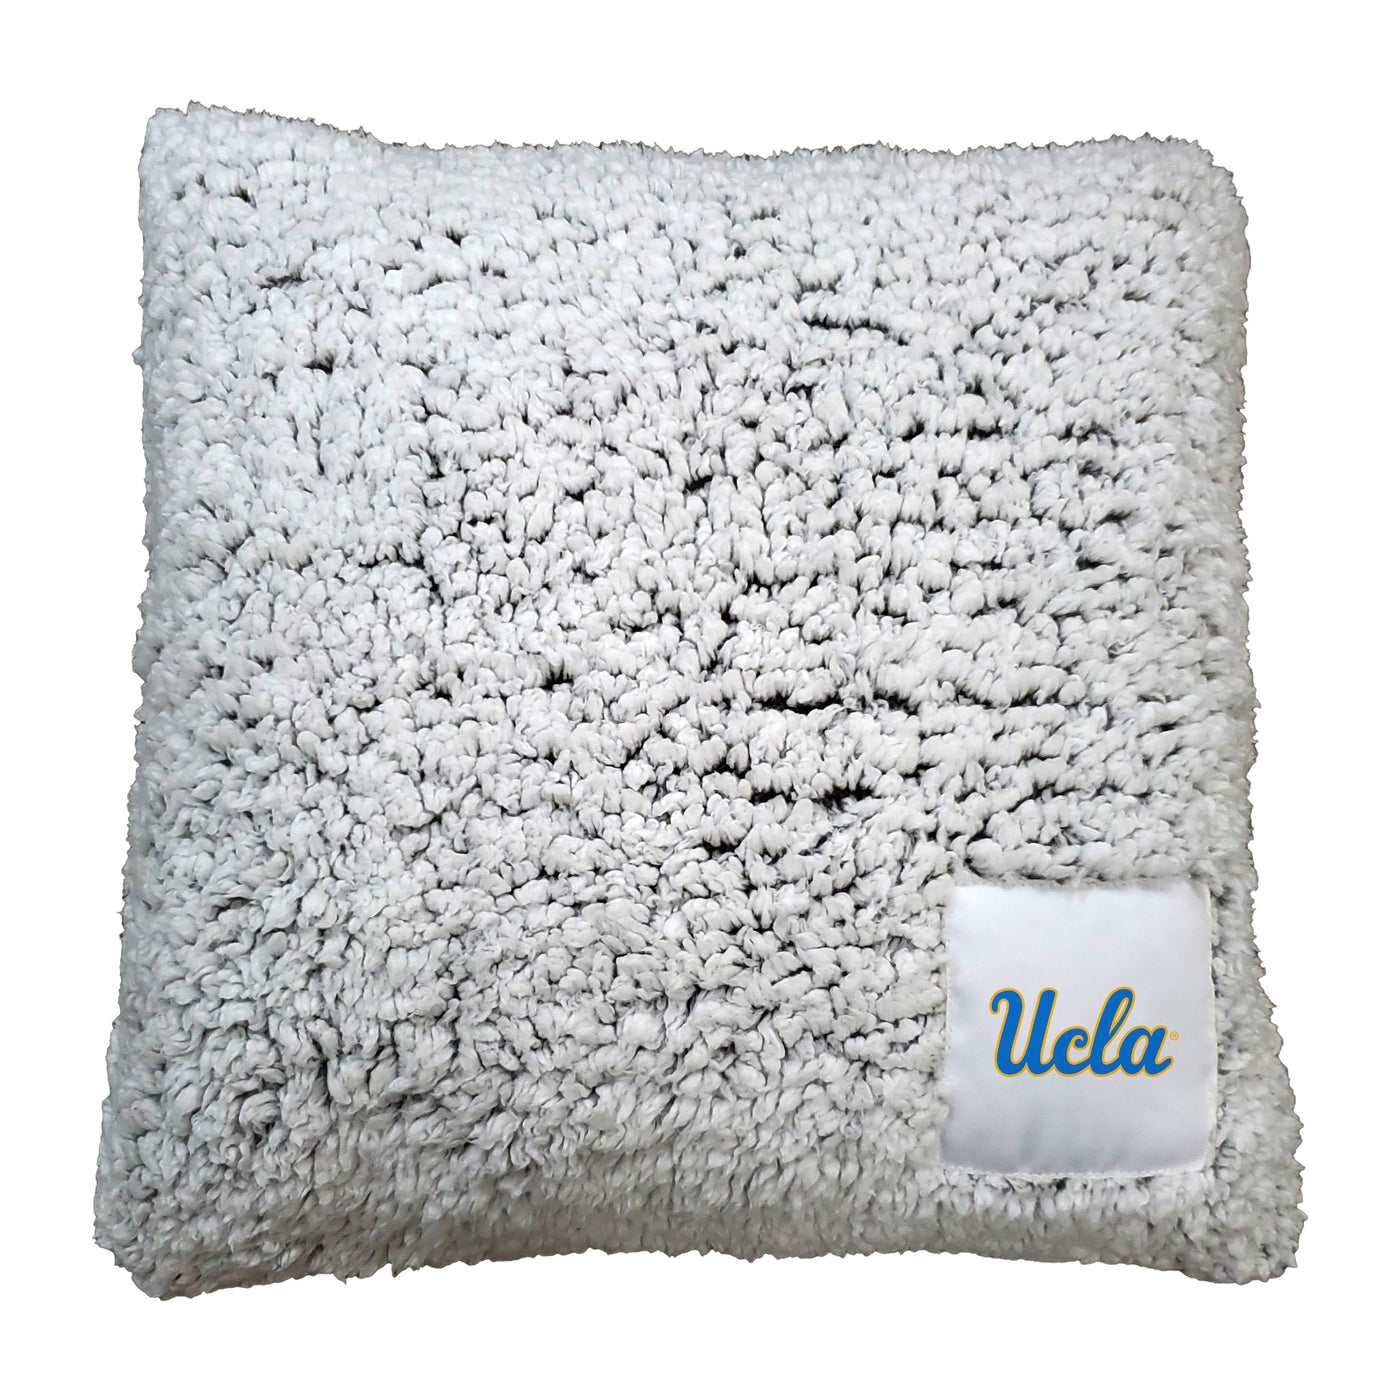 UCLA Frosty Pillow